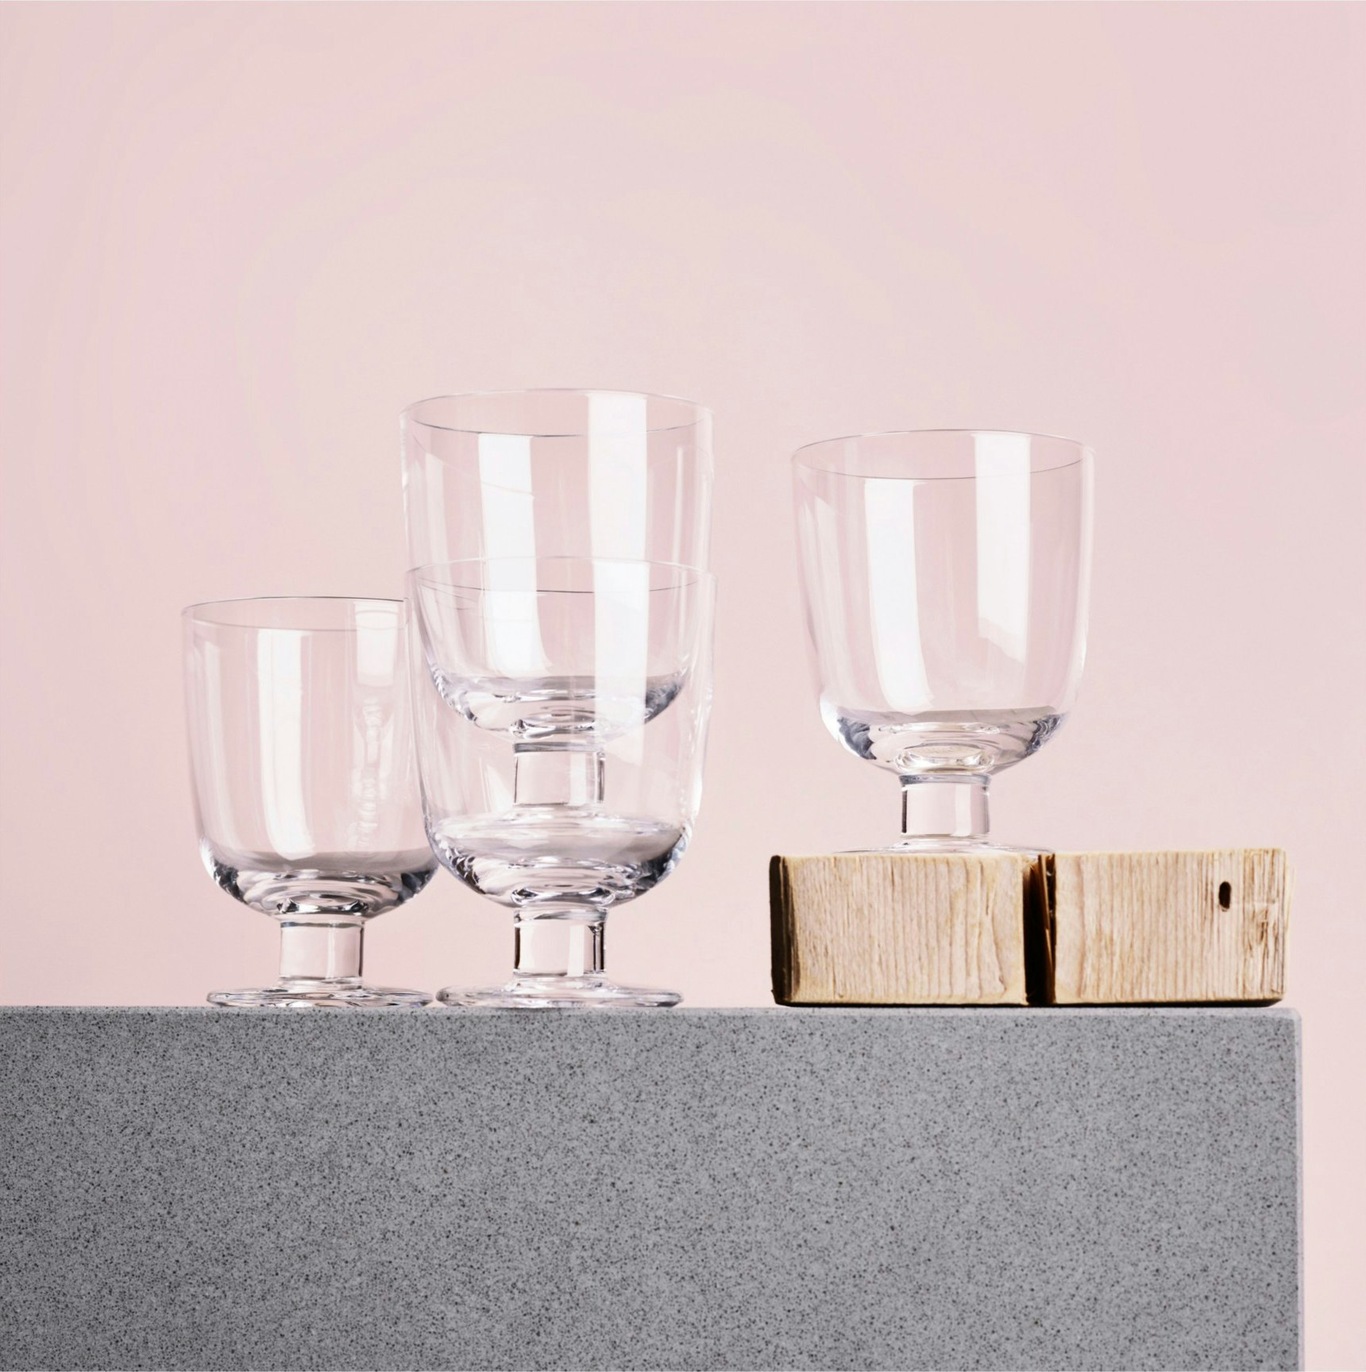 https://royaldesign.com/image/2/iittala-lempi-drinking-glass-34-cl-4-pcs-clear-1?w=800&quality=80